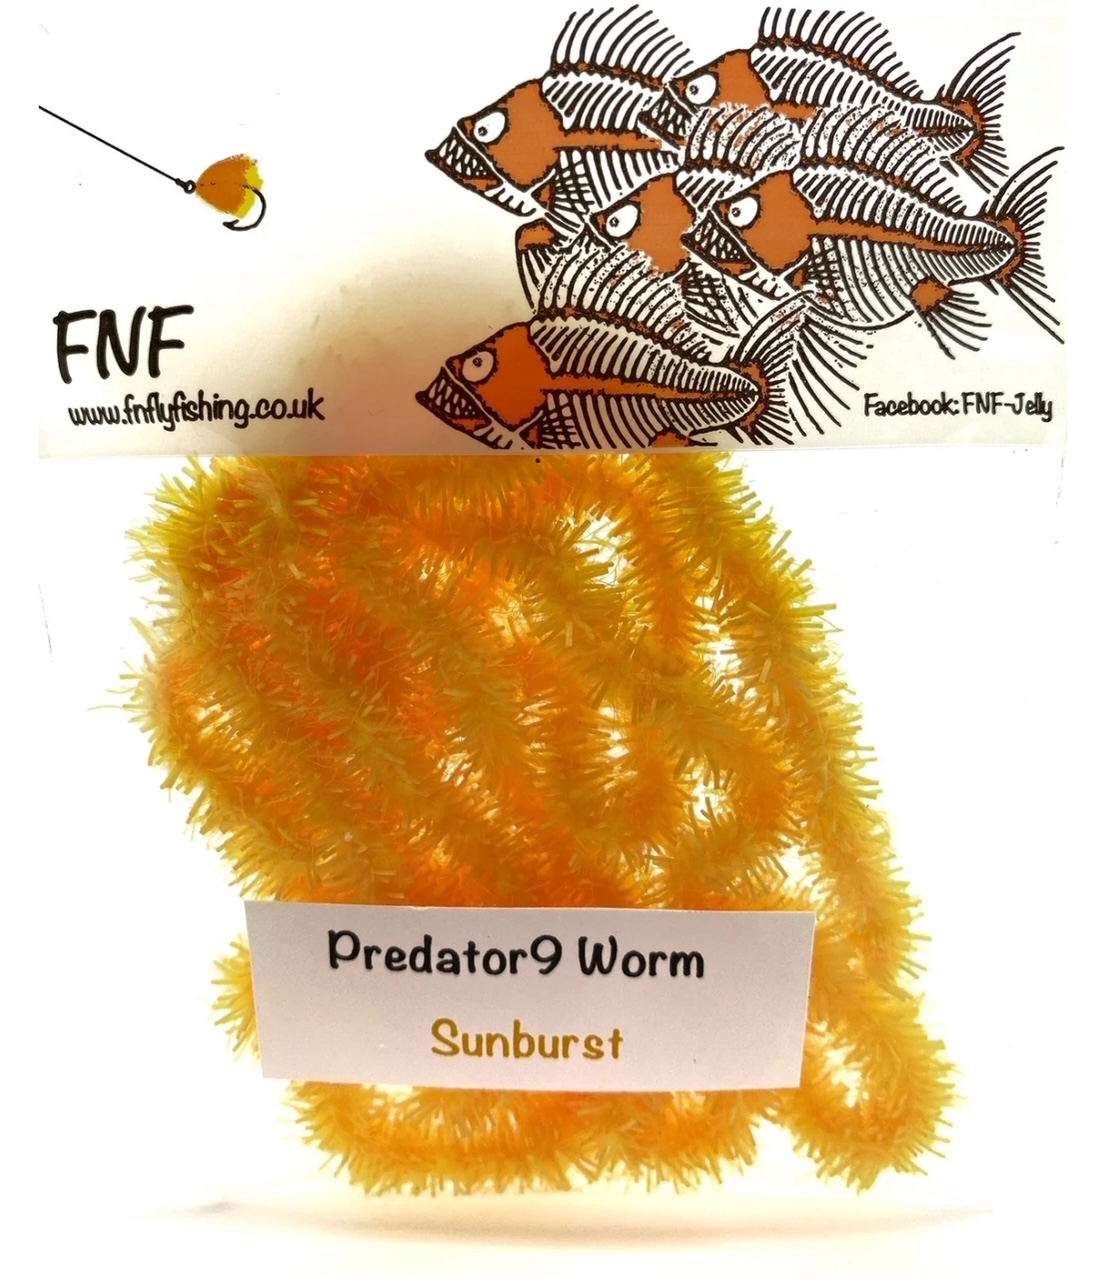 FNF Predator9 Worm - Sunburst